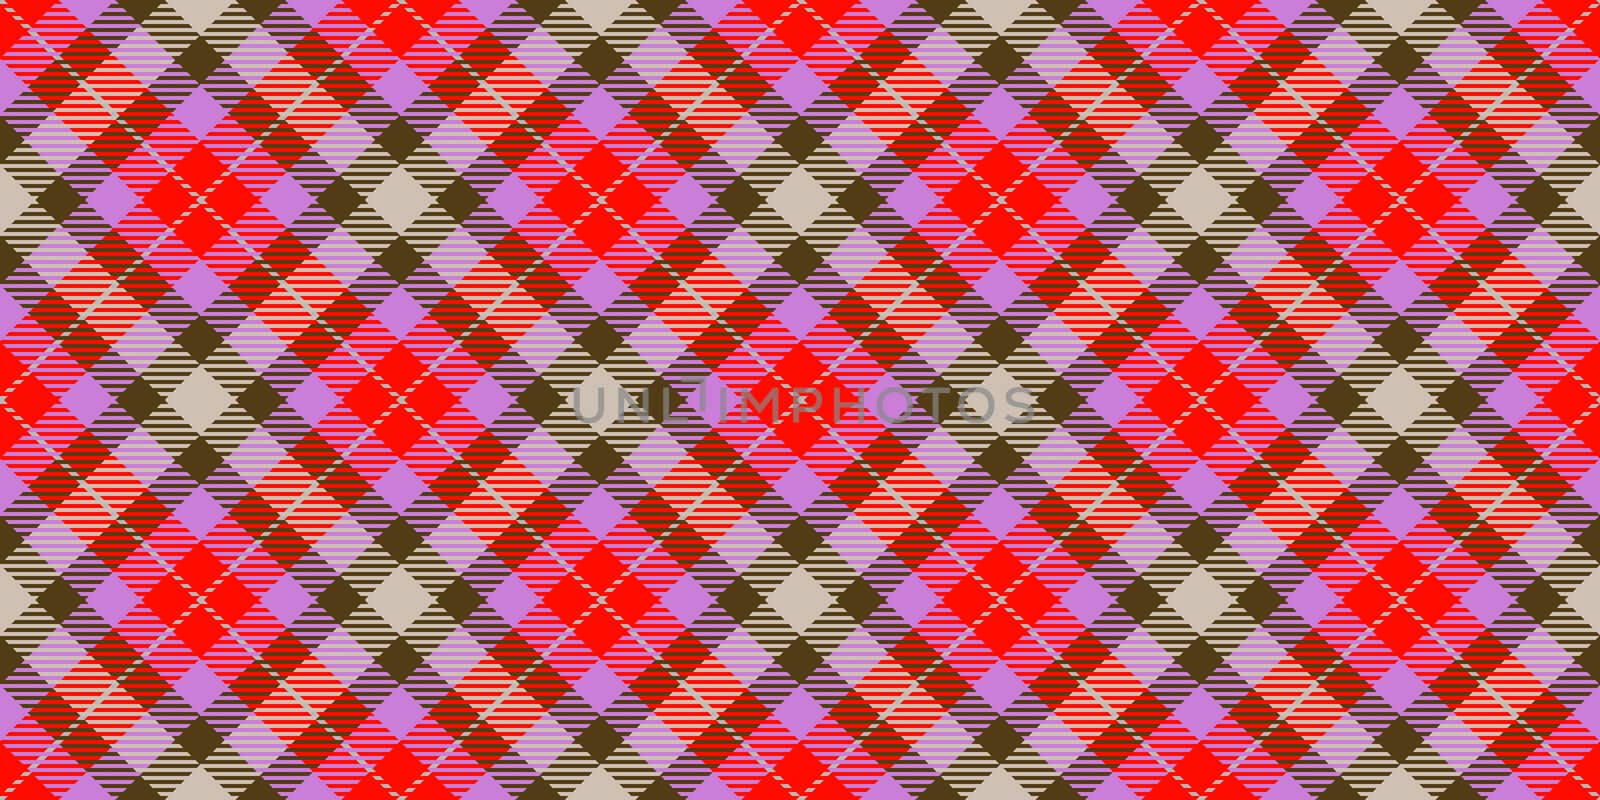 Red Seamless Checkered Rhombuses Pattern. Plaid Rug Background. Tartan Texture.